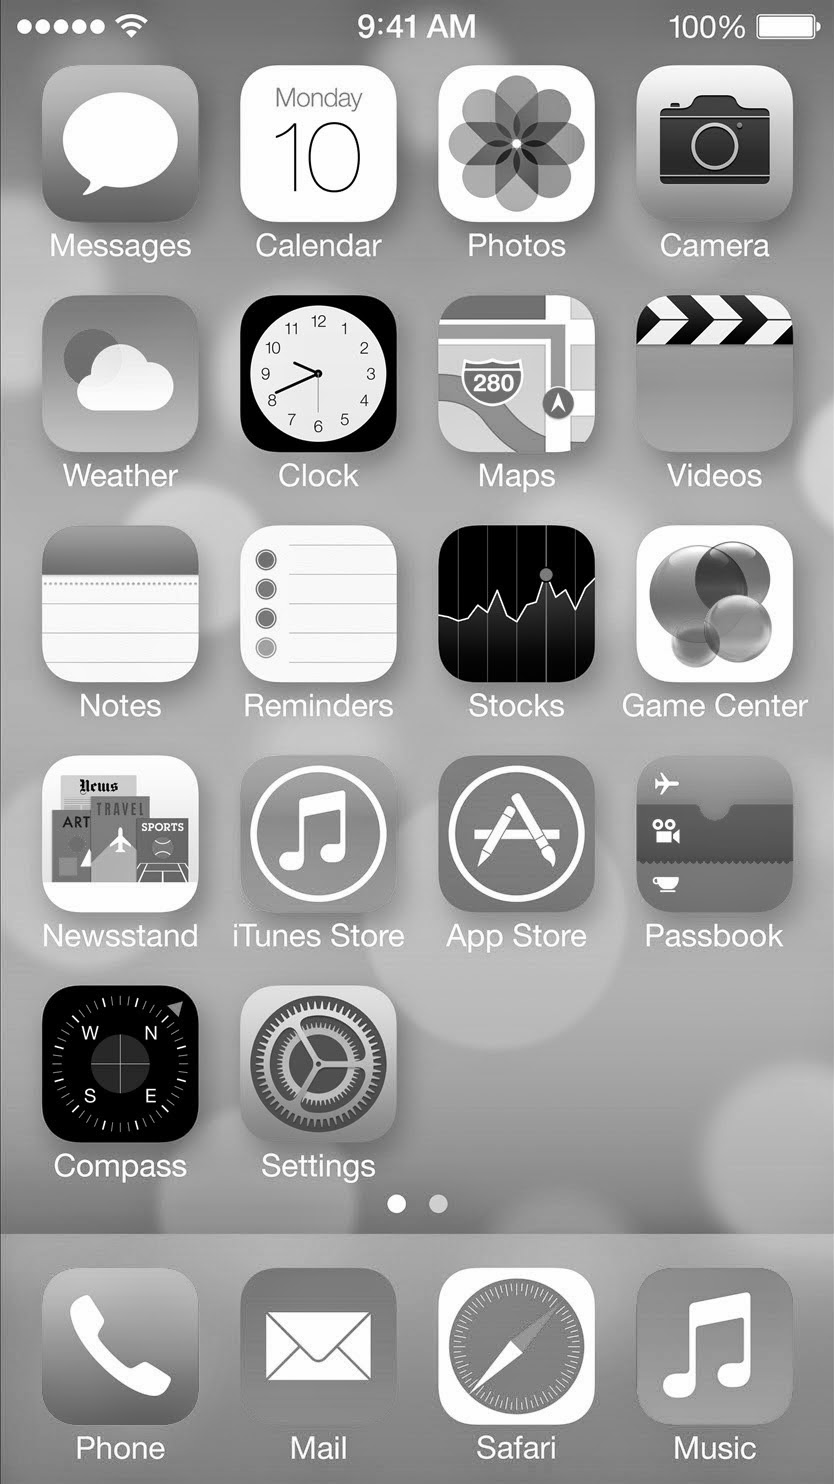 Altered image not an iOS 8 screenshot